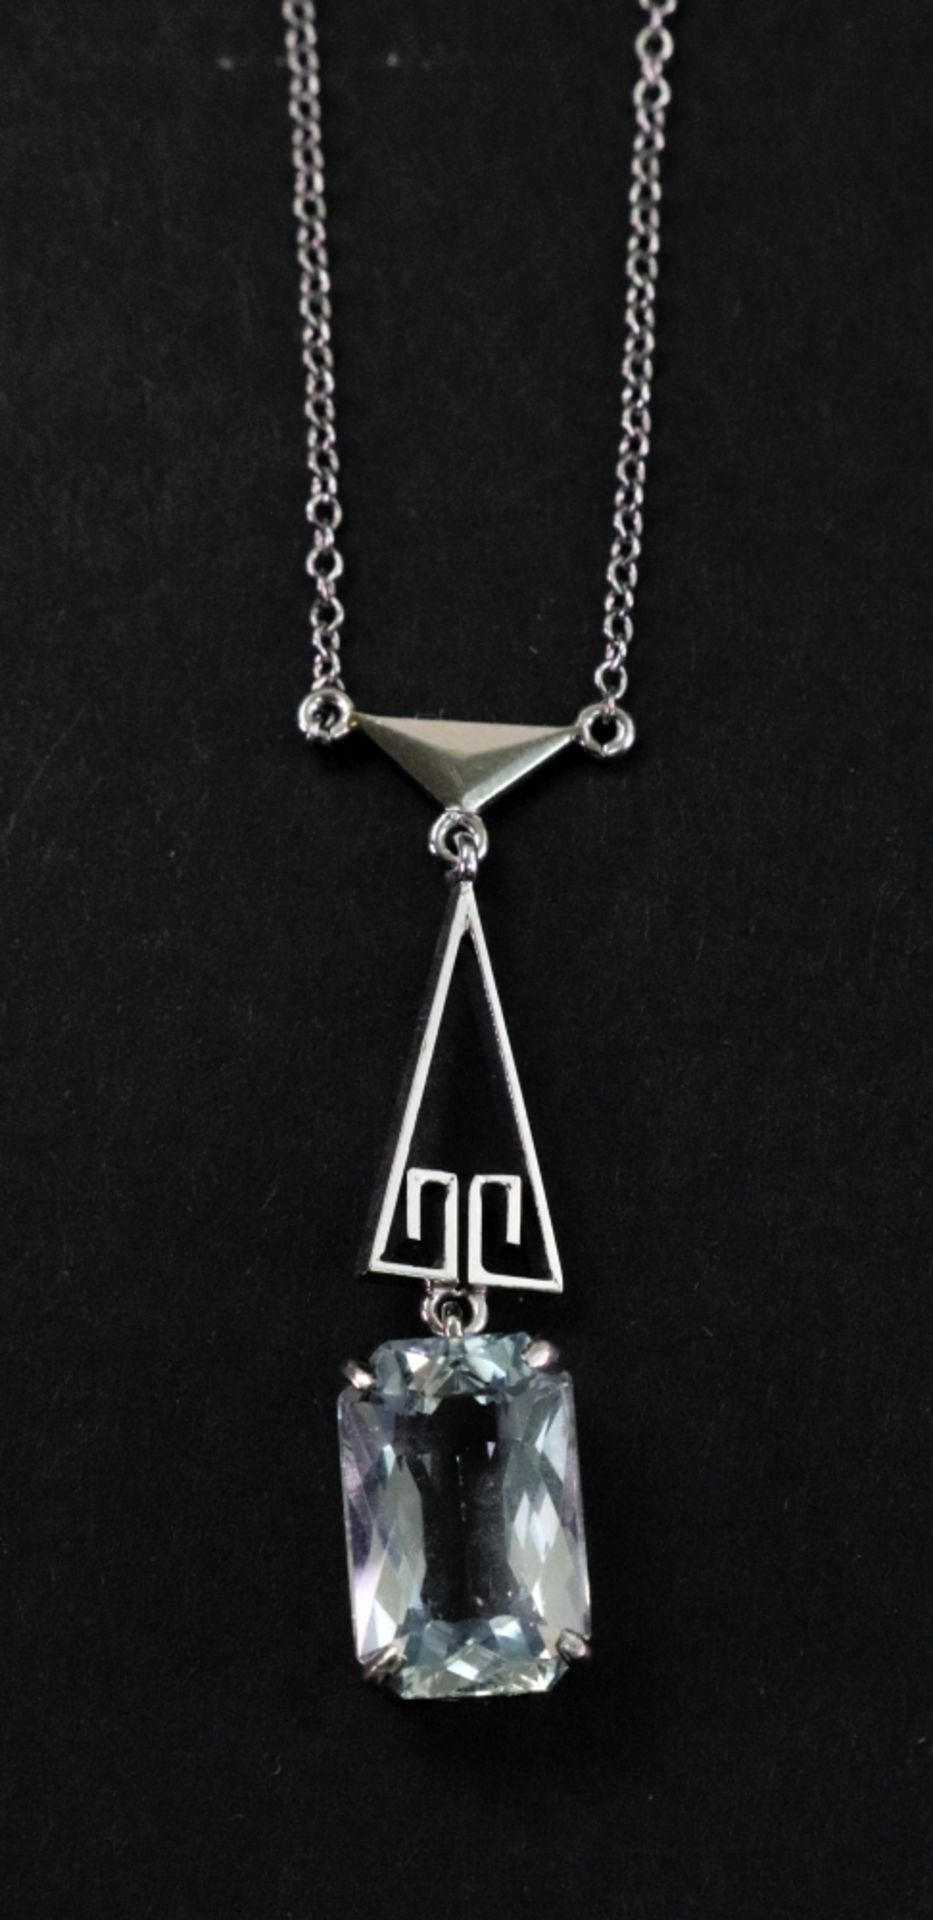 An aquamarine pendant necklace,